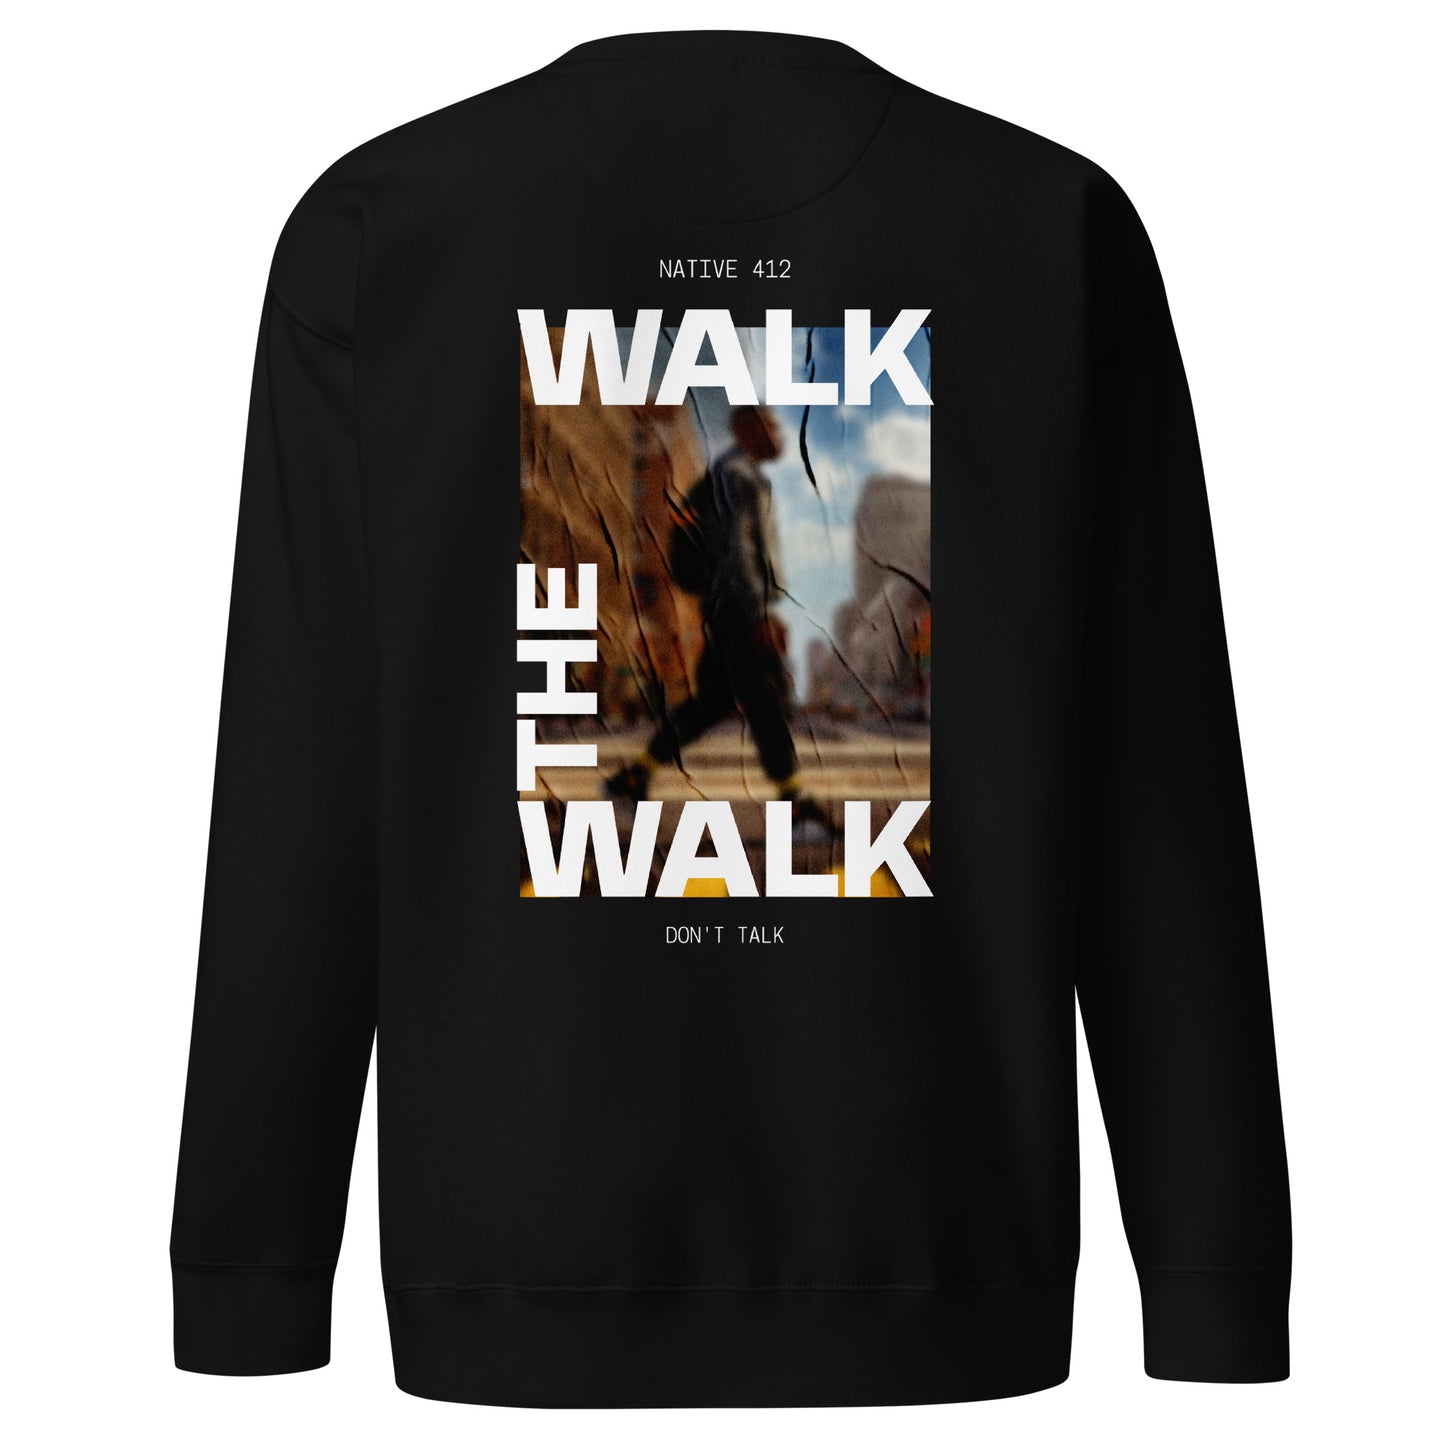 Walk the Walk Unisex Premium Sweatshirt